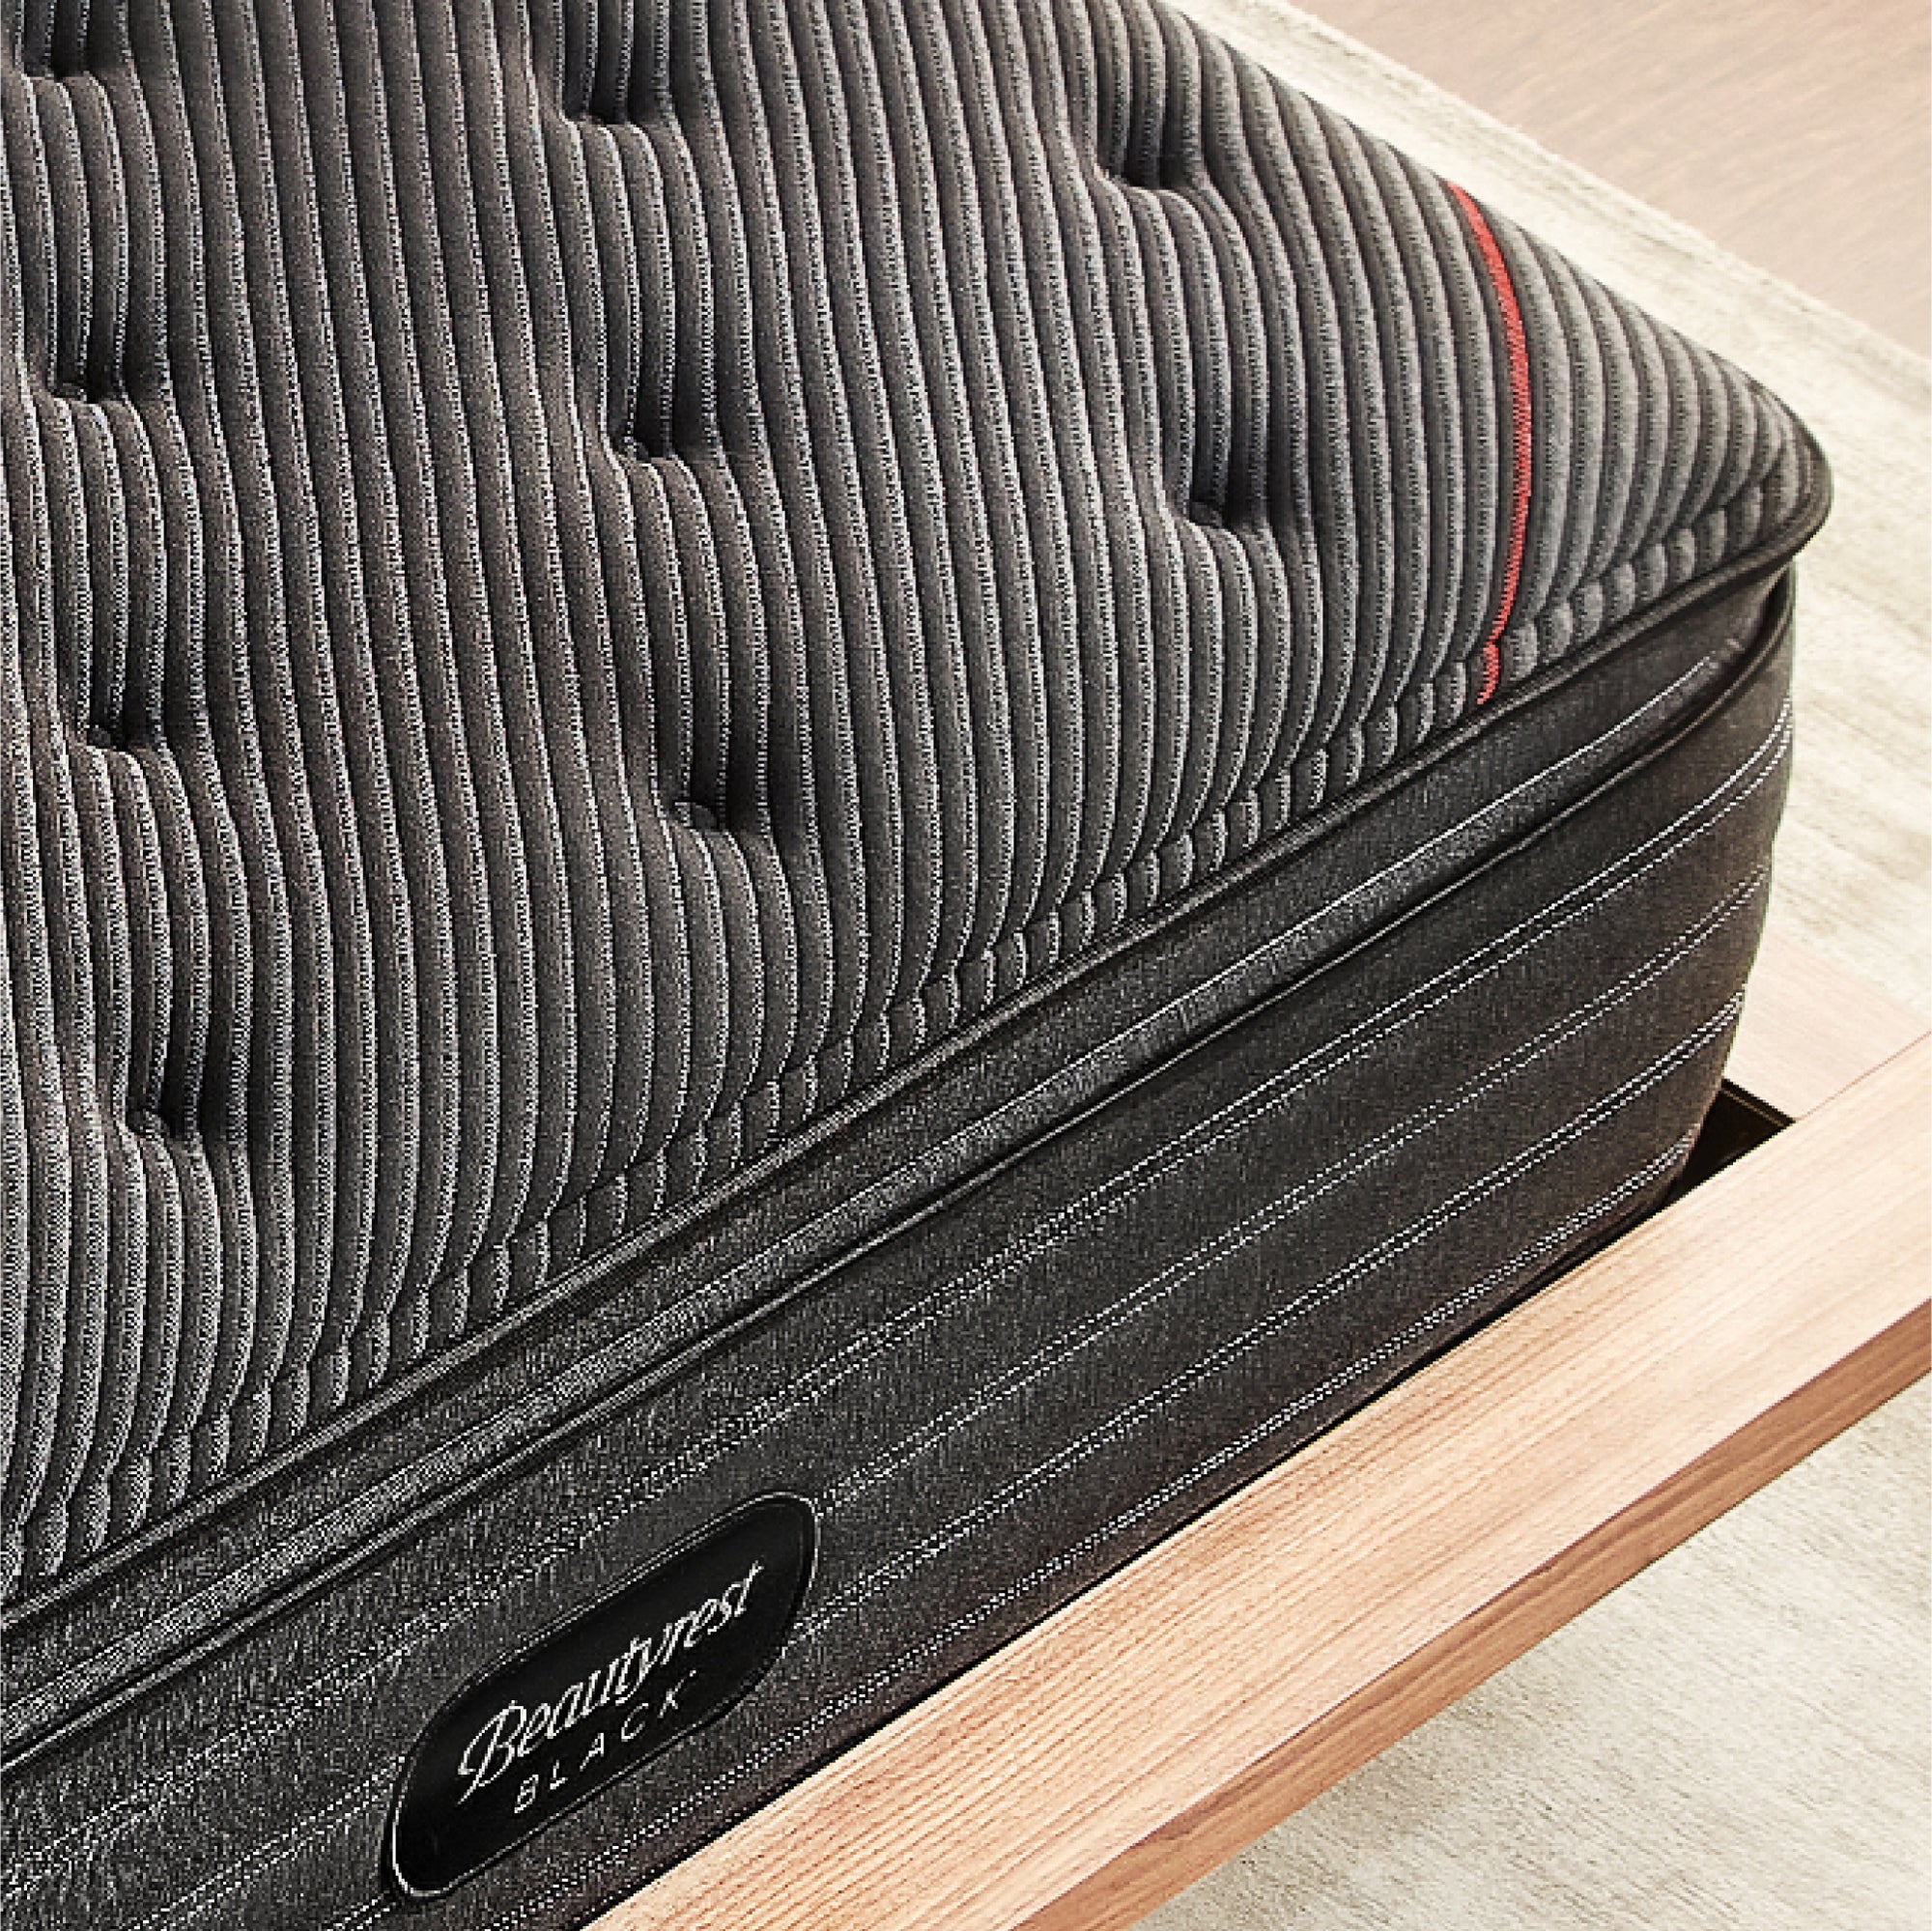 The Beautyrest Black deluxe c-class mattress ||series: deluxe c-class|| feel: plush pillow top